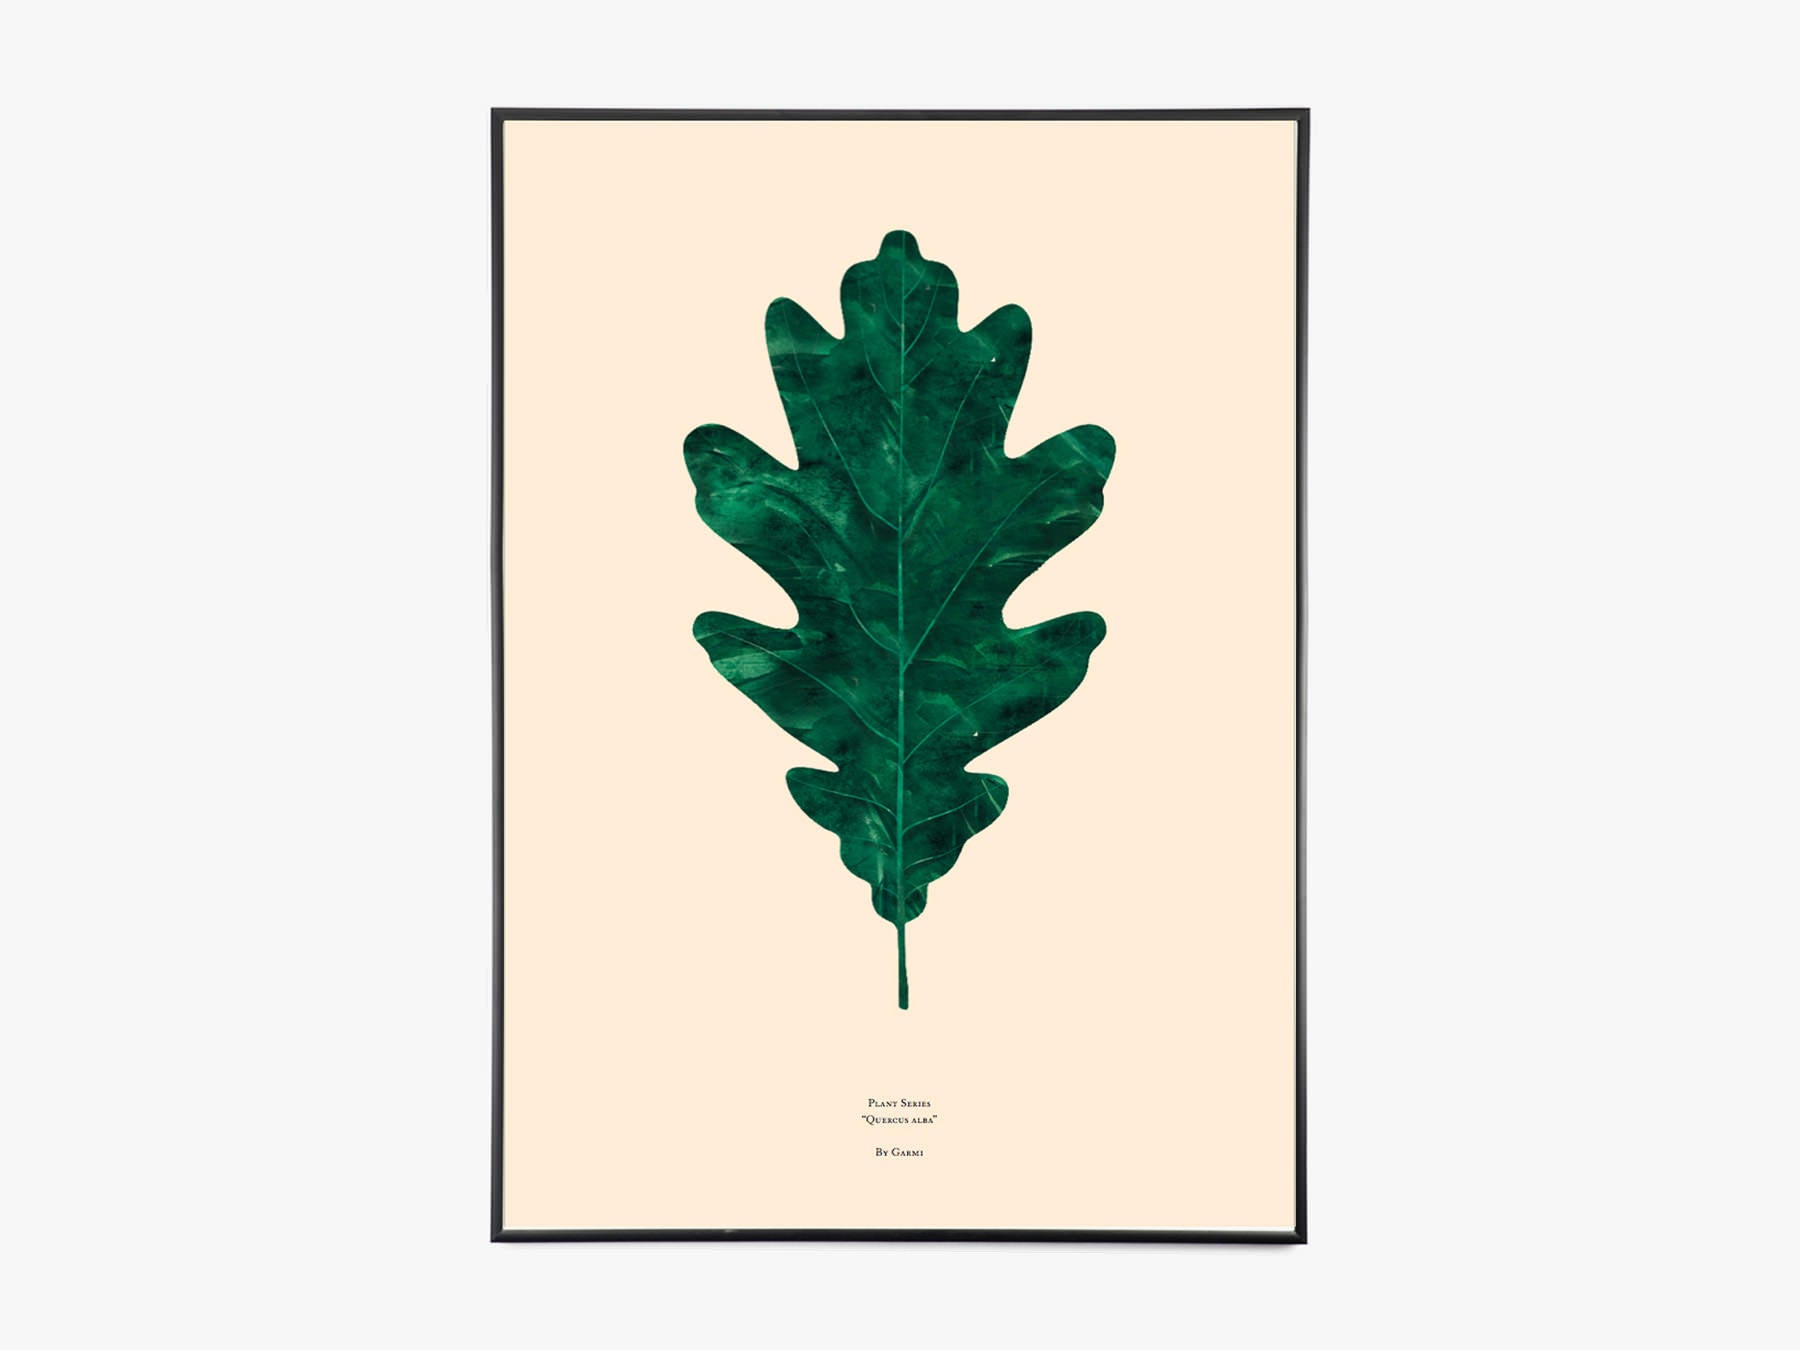 Quercus alba ek leaf - affisch från Garmi